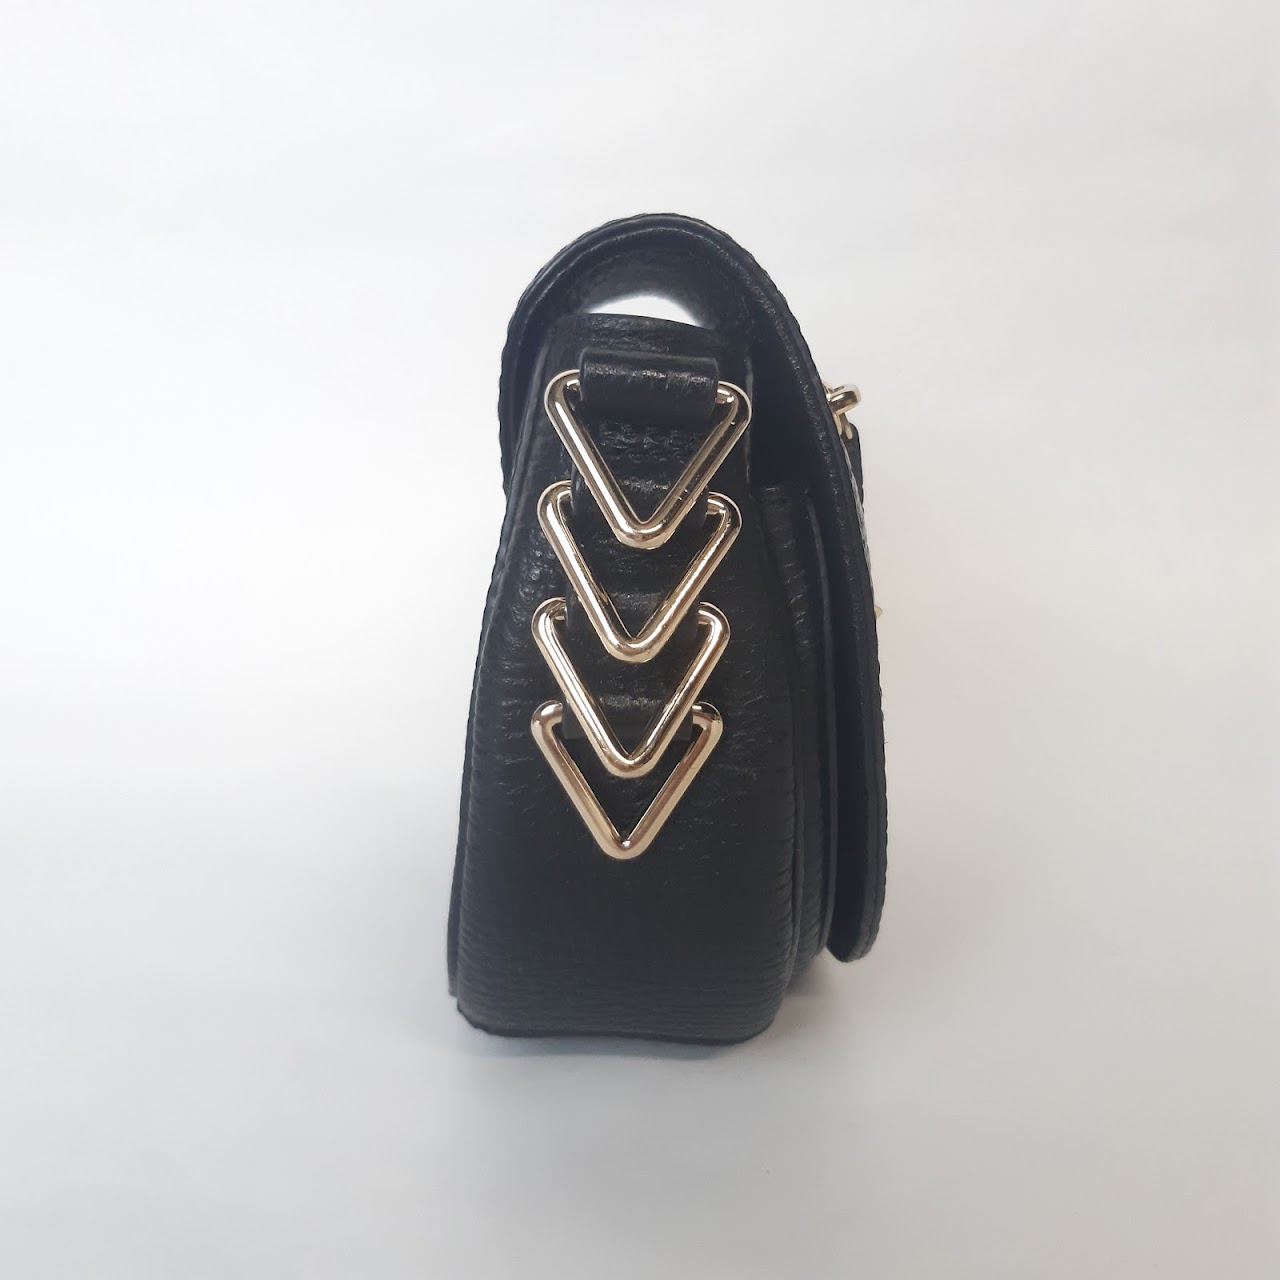 Rebecca Minkoff Black Leather Crossbody Bag